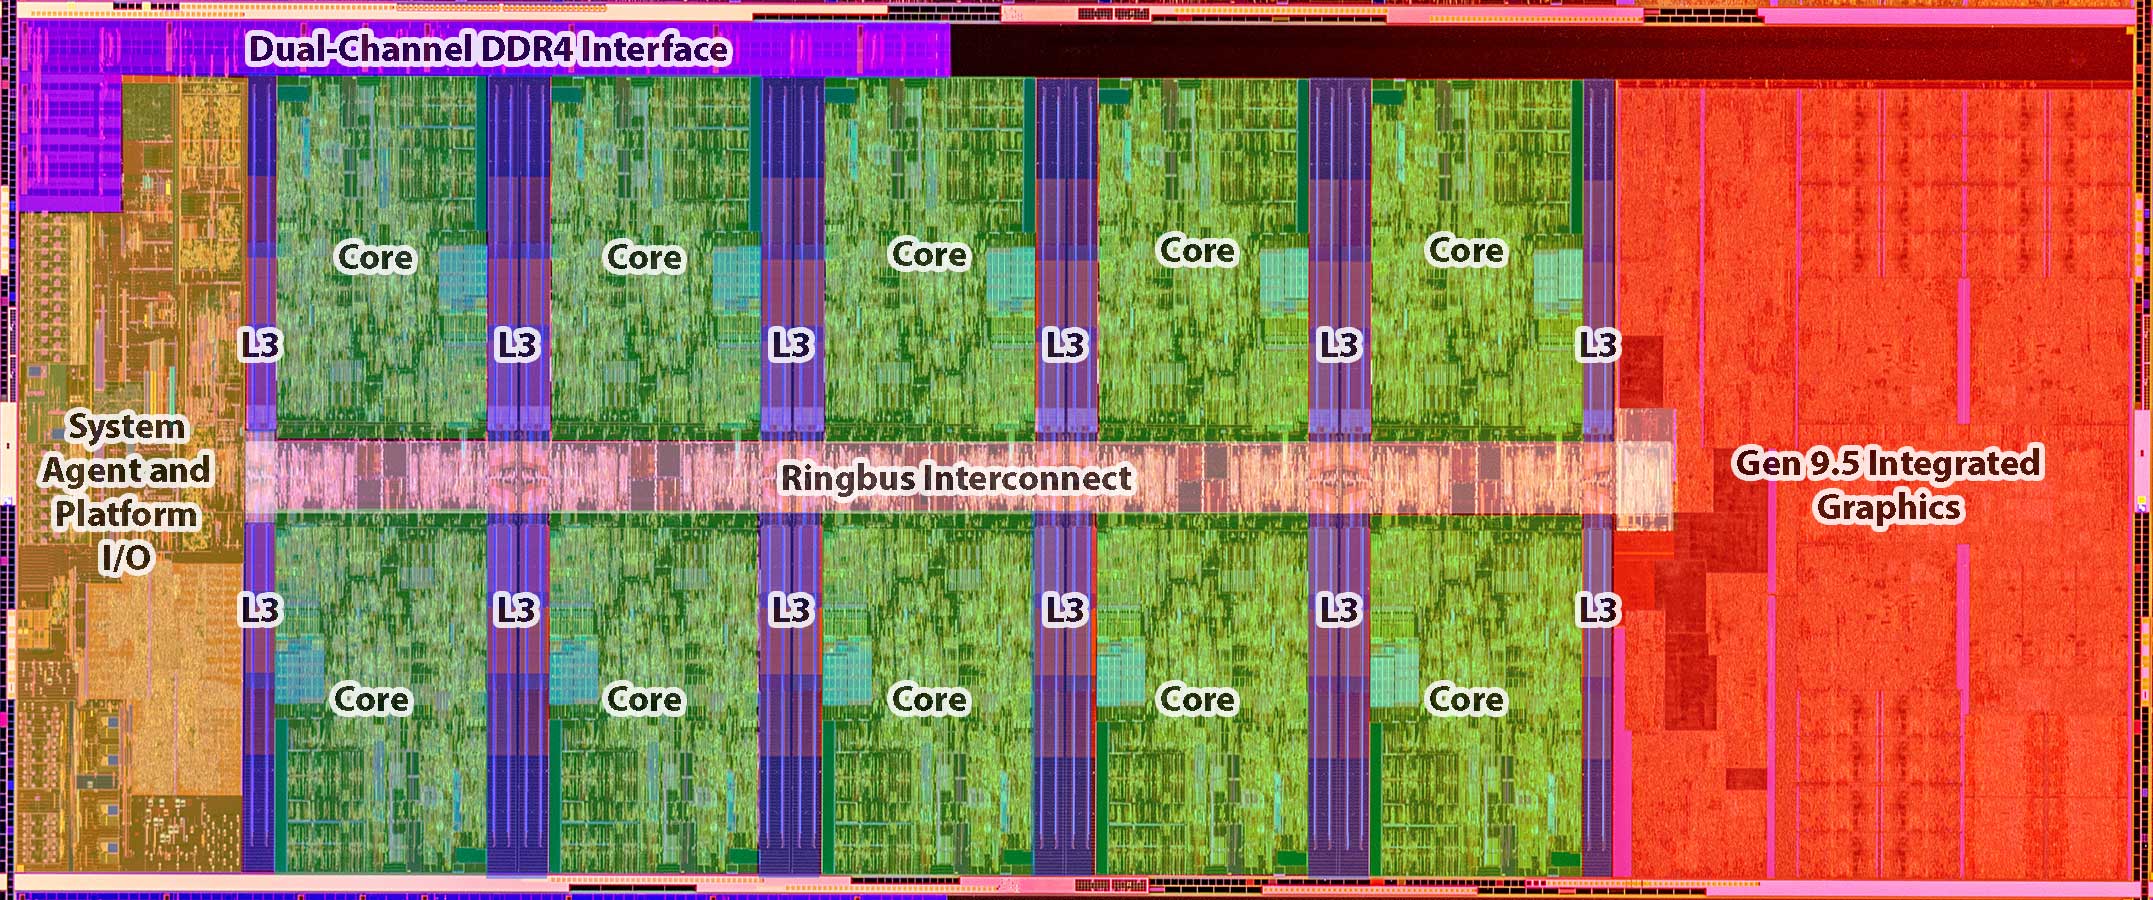 Intel Core i9-10900K Review - World's Fastest Gaming Processor -  Architecture